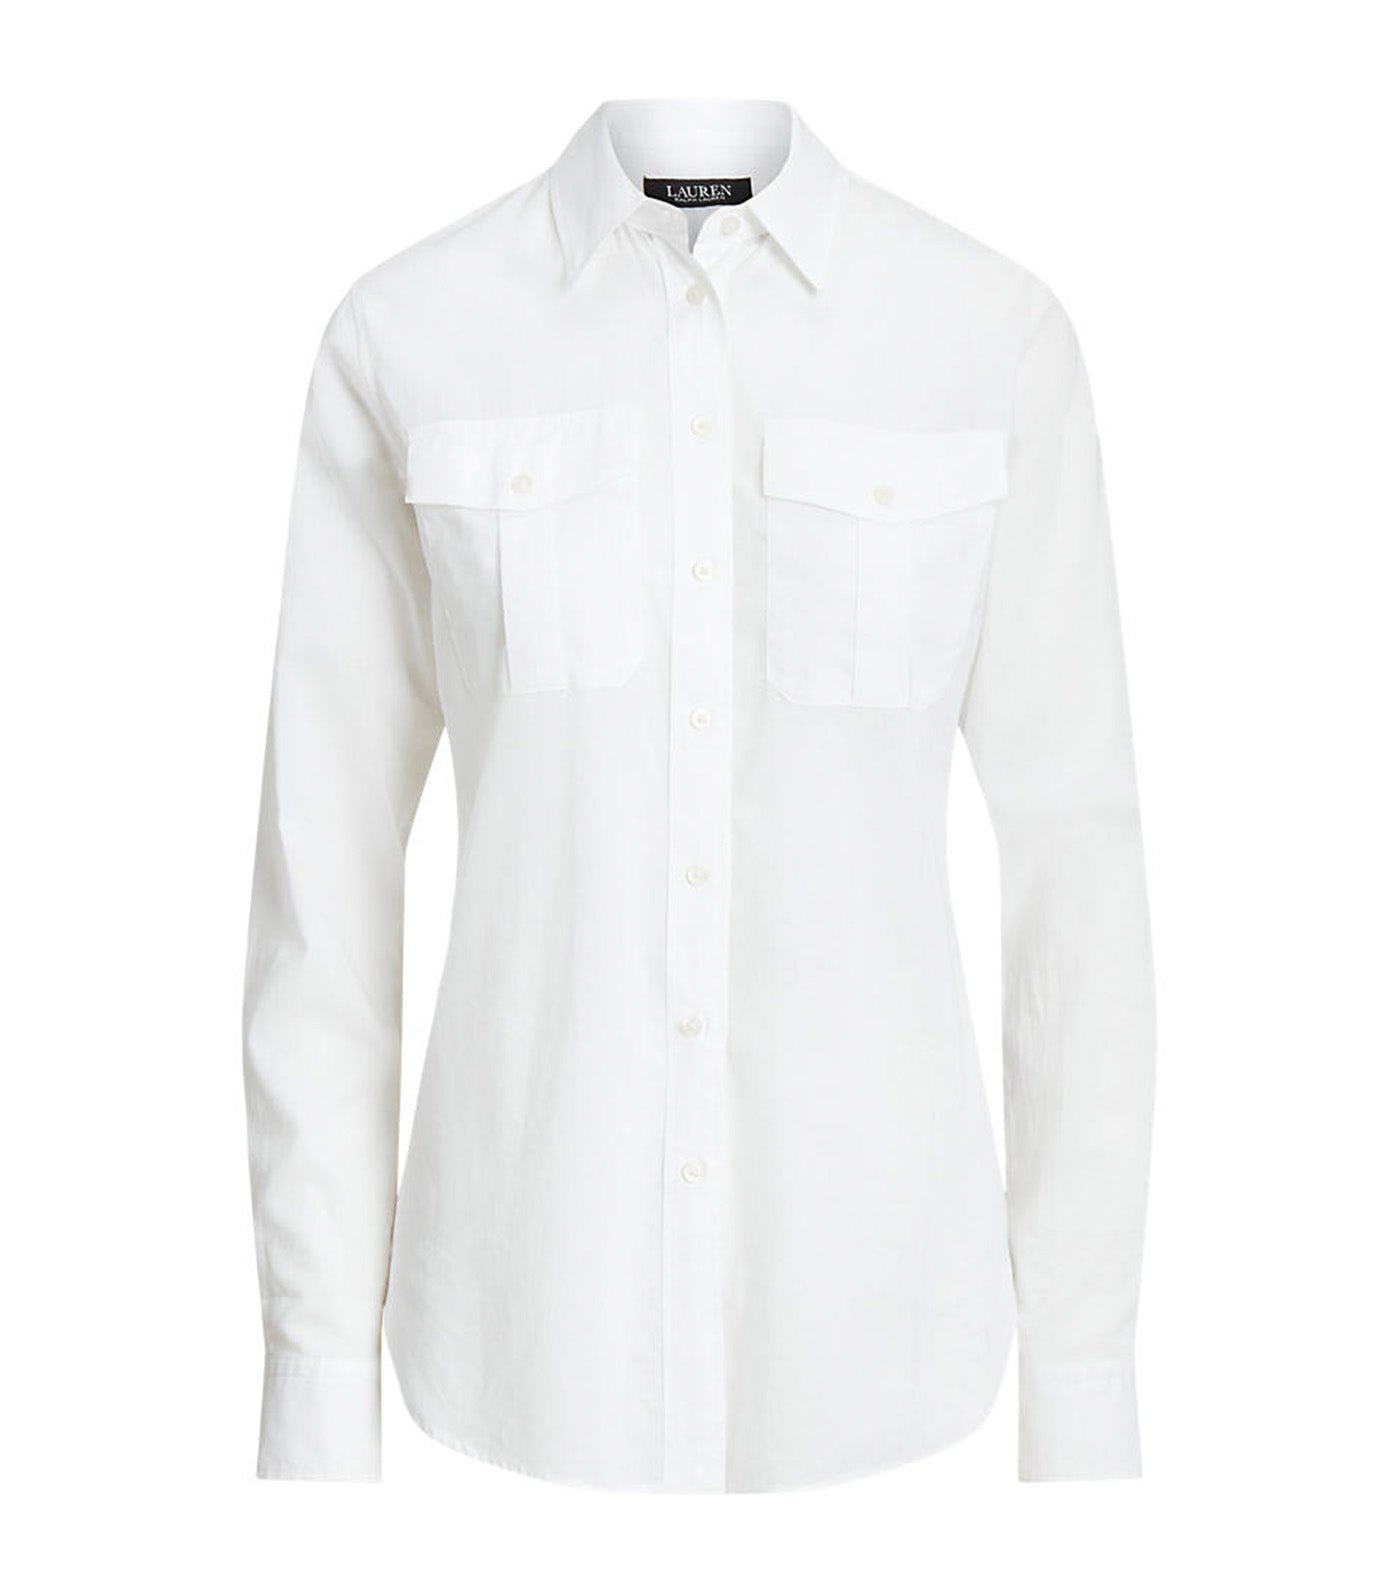 Lauren Ralph Lauren Women's Striped Cotton Broadcloth Shirt Blue/White